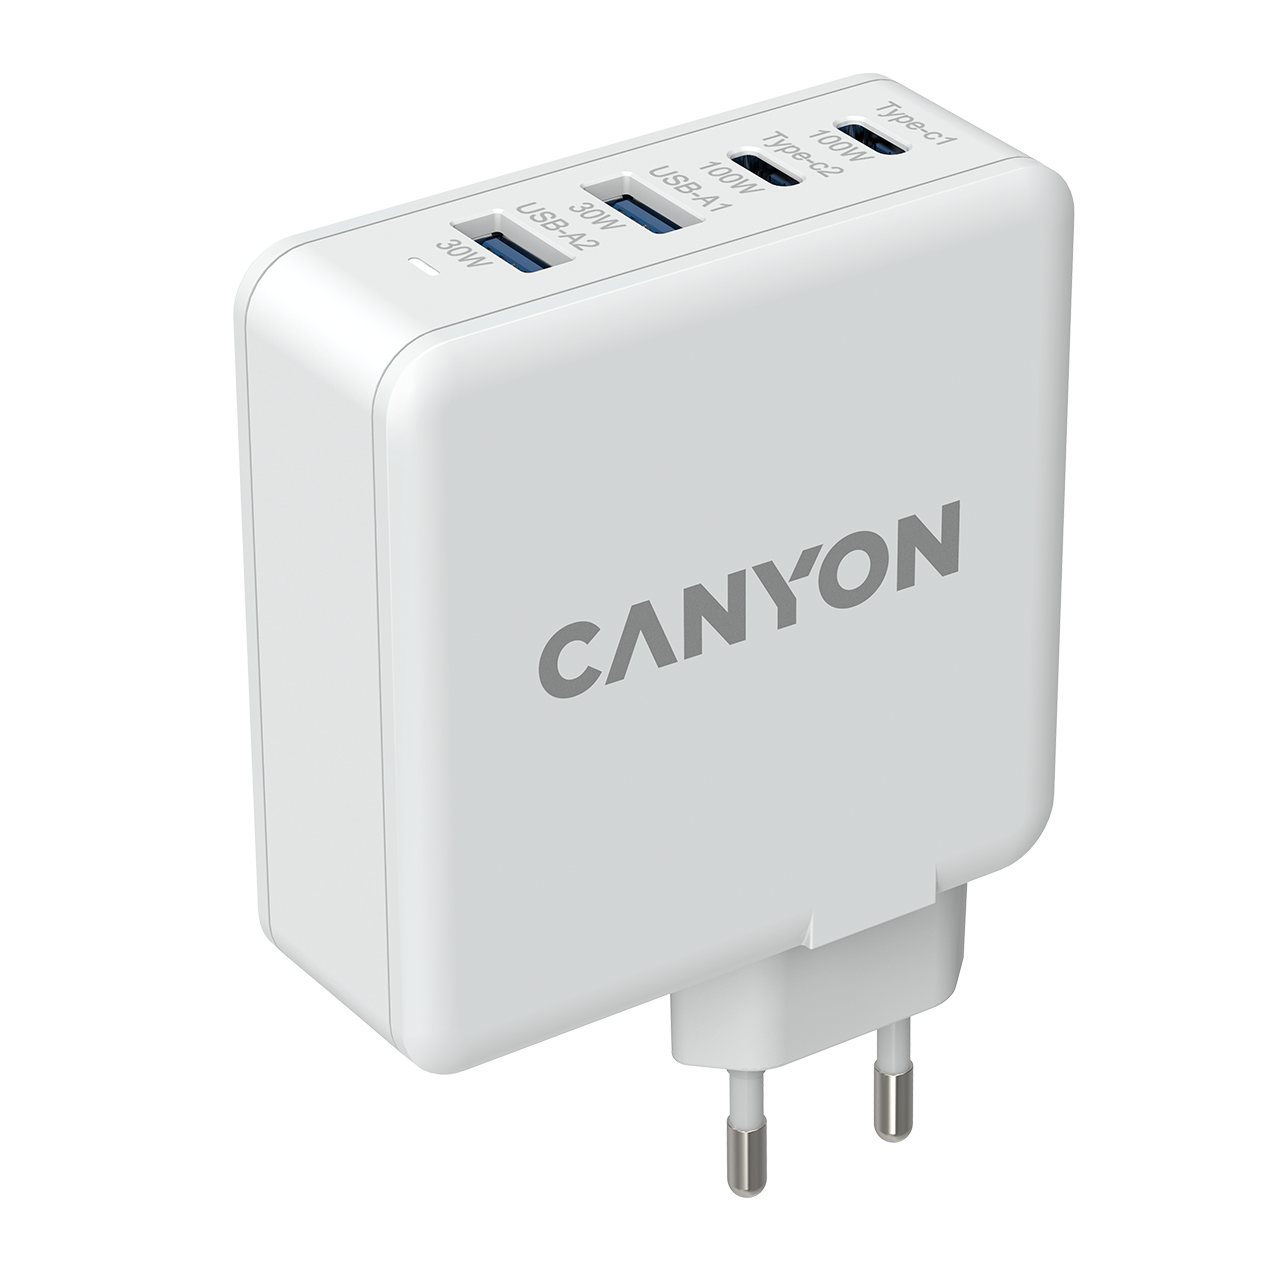 Incarcator retea Canyon H-100, GaN 100W, 2x USB, 2x USB-C, White